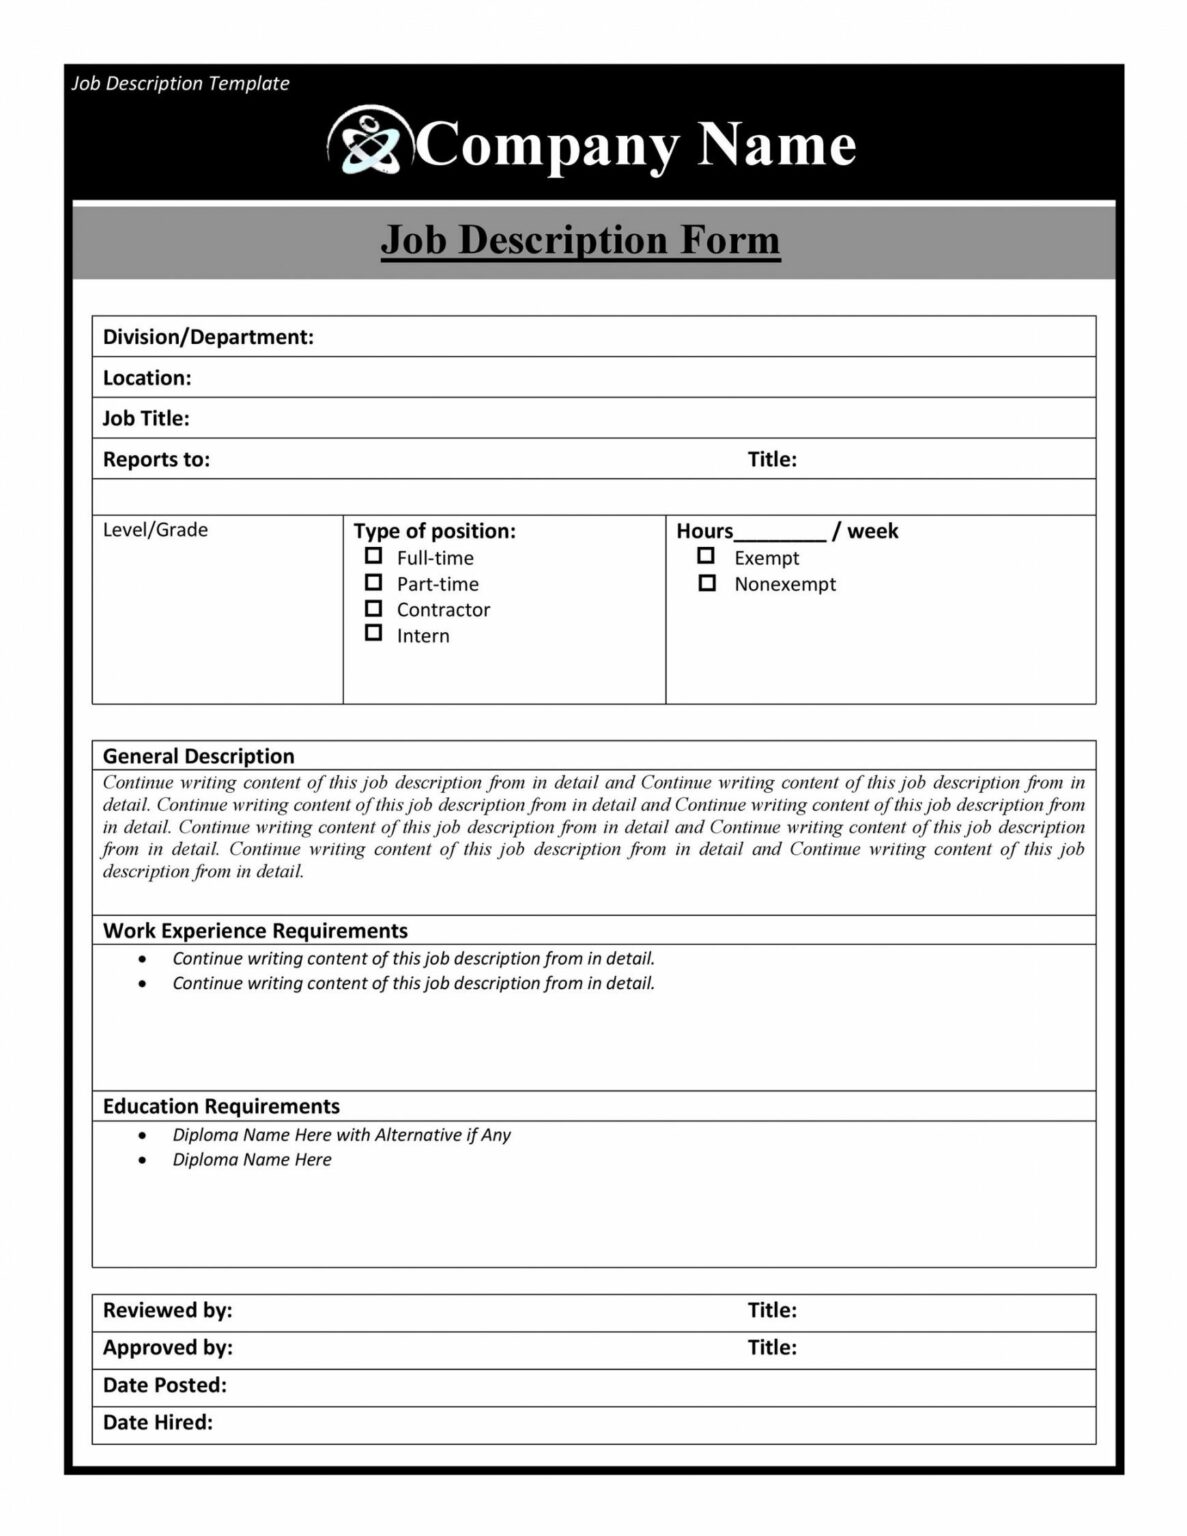 Free 47 Job Description Templates & Examples ᐅ Templatelab Blank Job